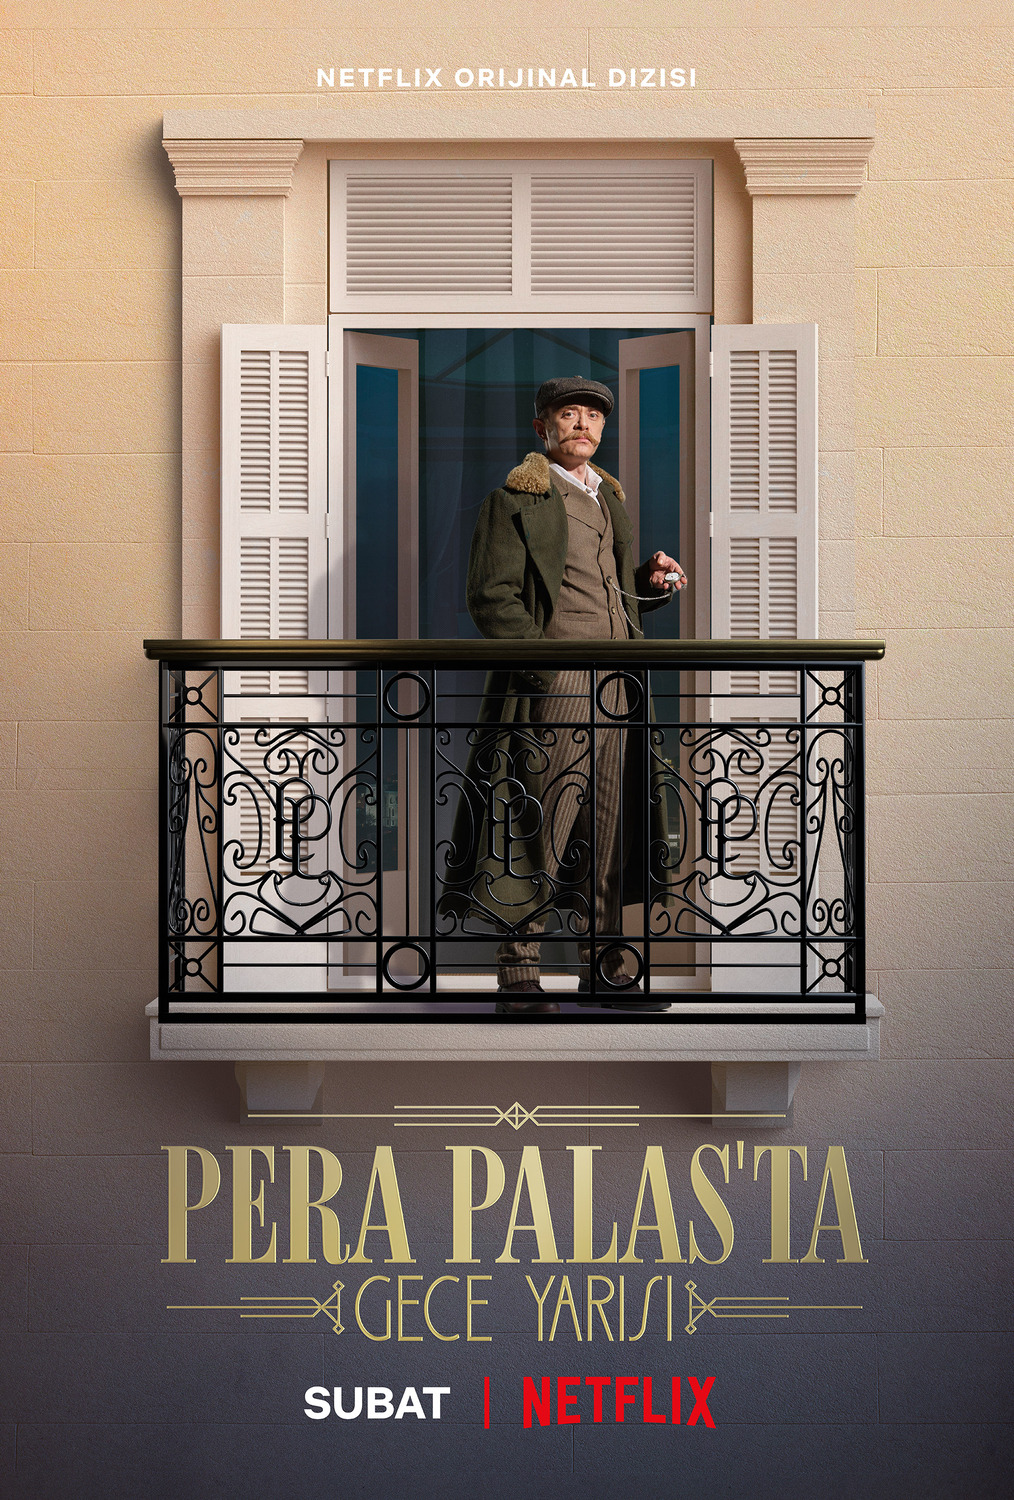 Extra Large TV Poster Image for Pera Palas'ta Gece Yarisi (#4 of 10)